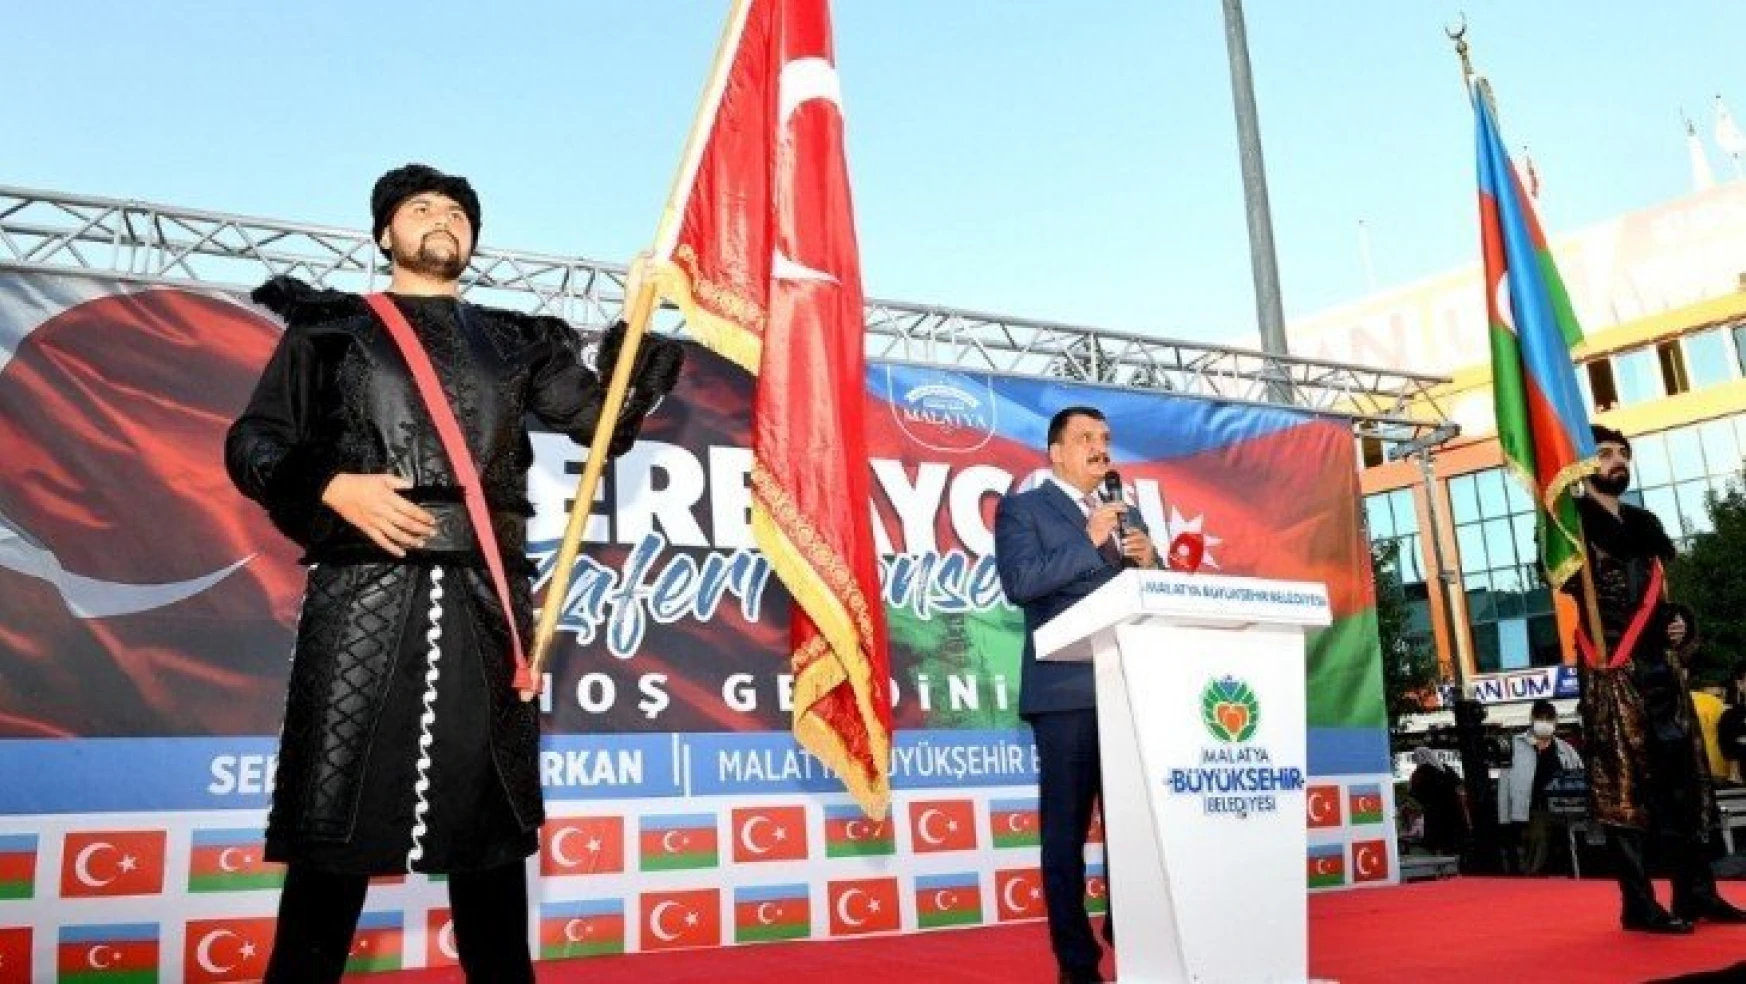 Malatya'da Azerbaycan için zafer konseri düzenledi